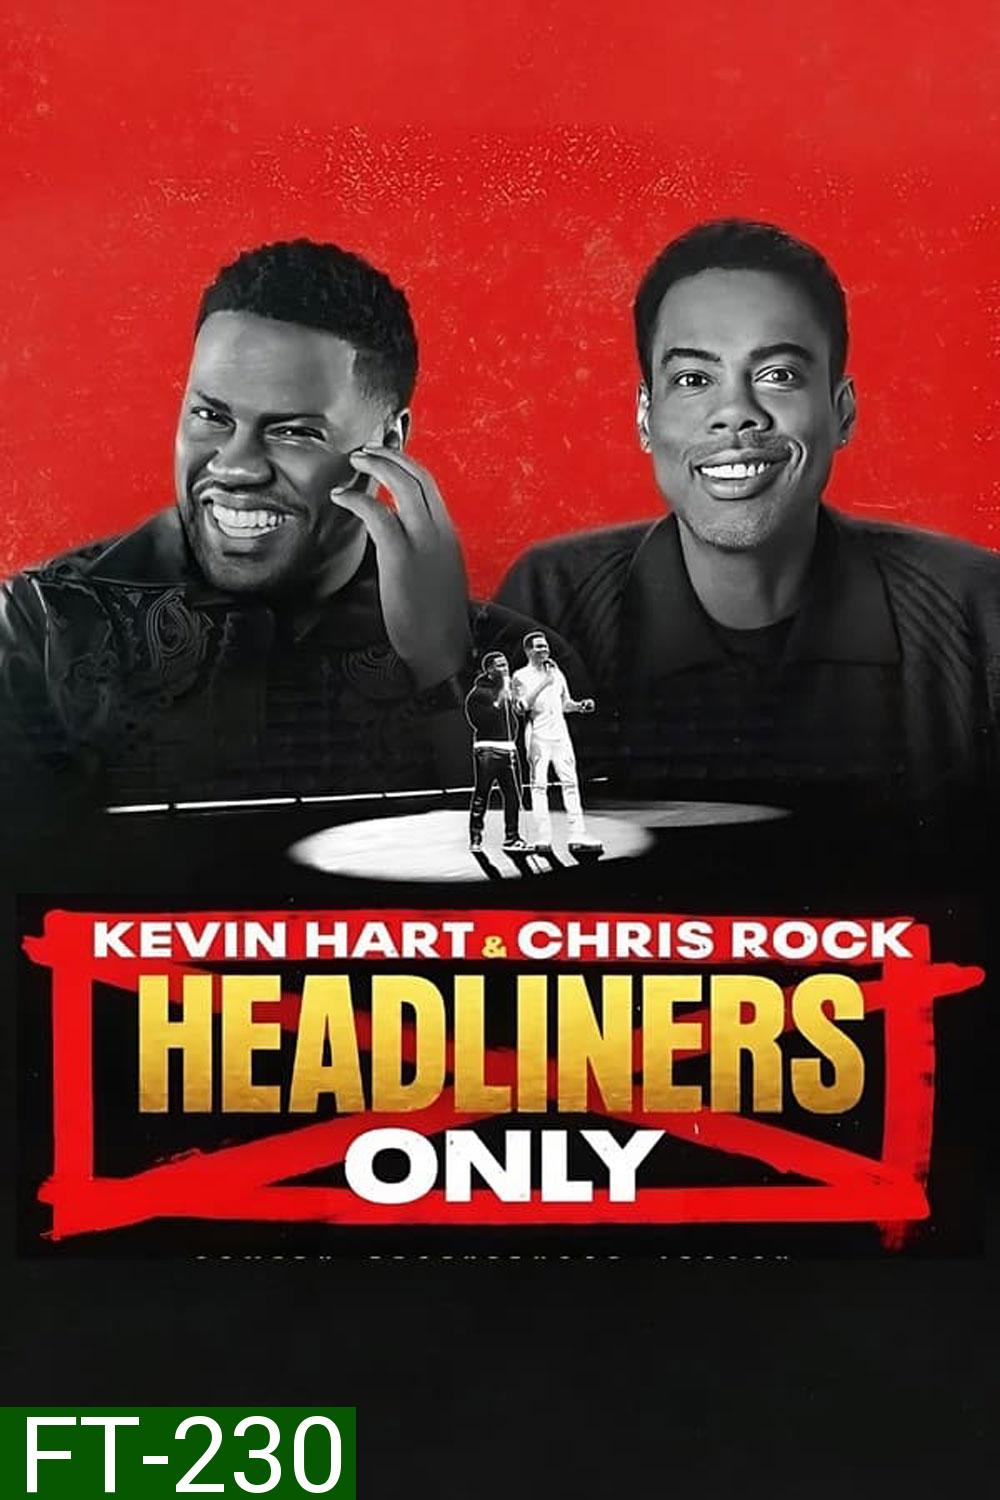 Kevin Hart & Chris Rock Headliners Only (2023) เควิน ฮาร์ทและคริส ร็อค: คนดังเท่านั้น